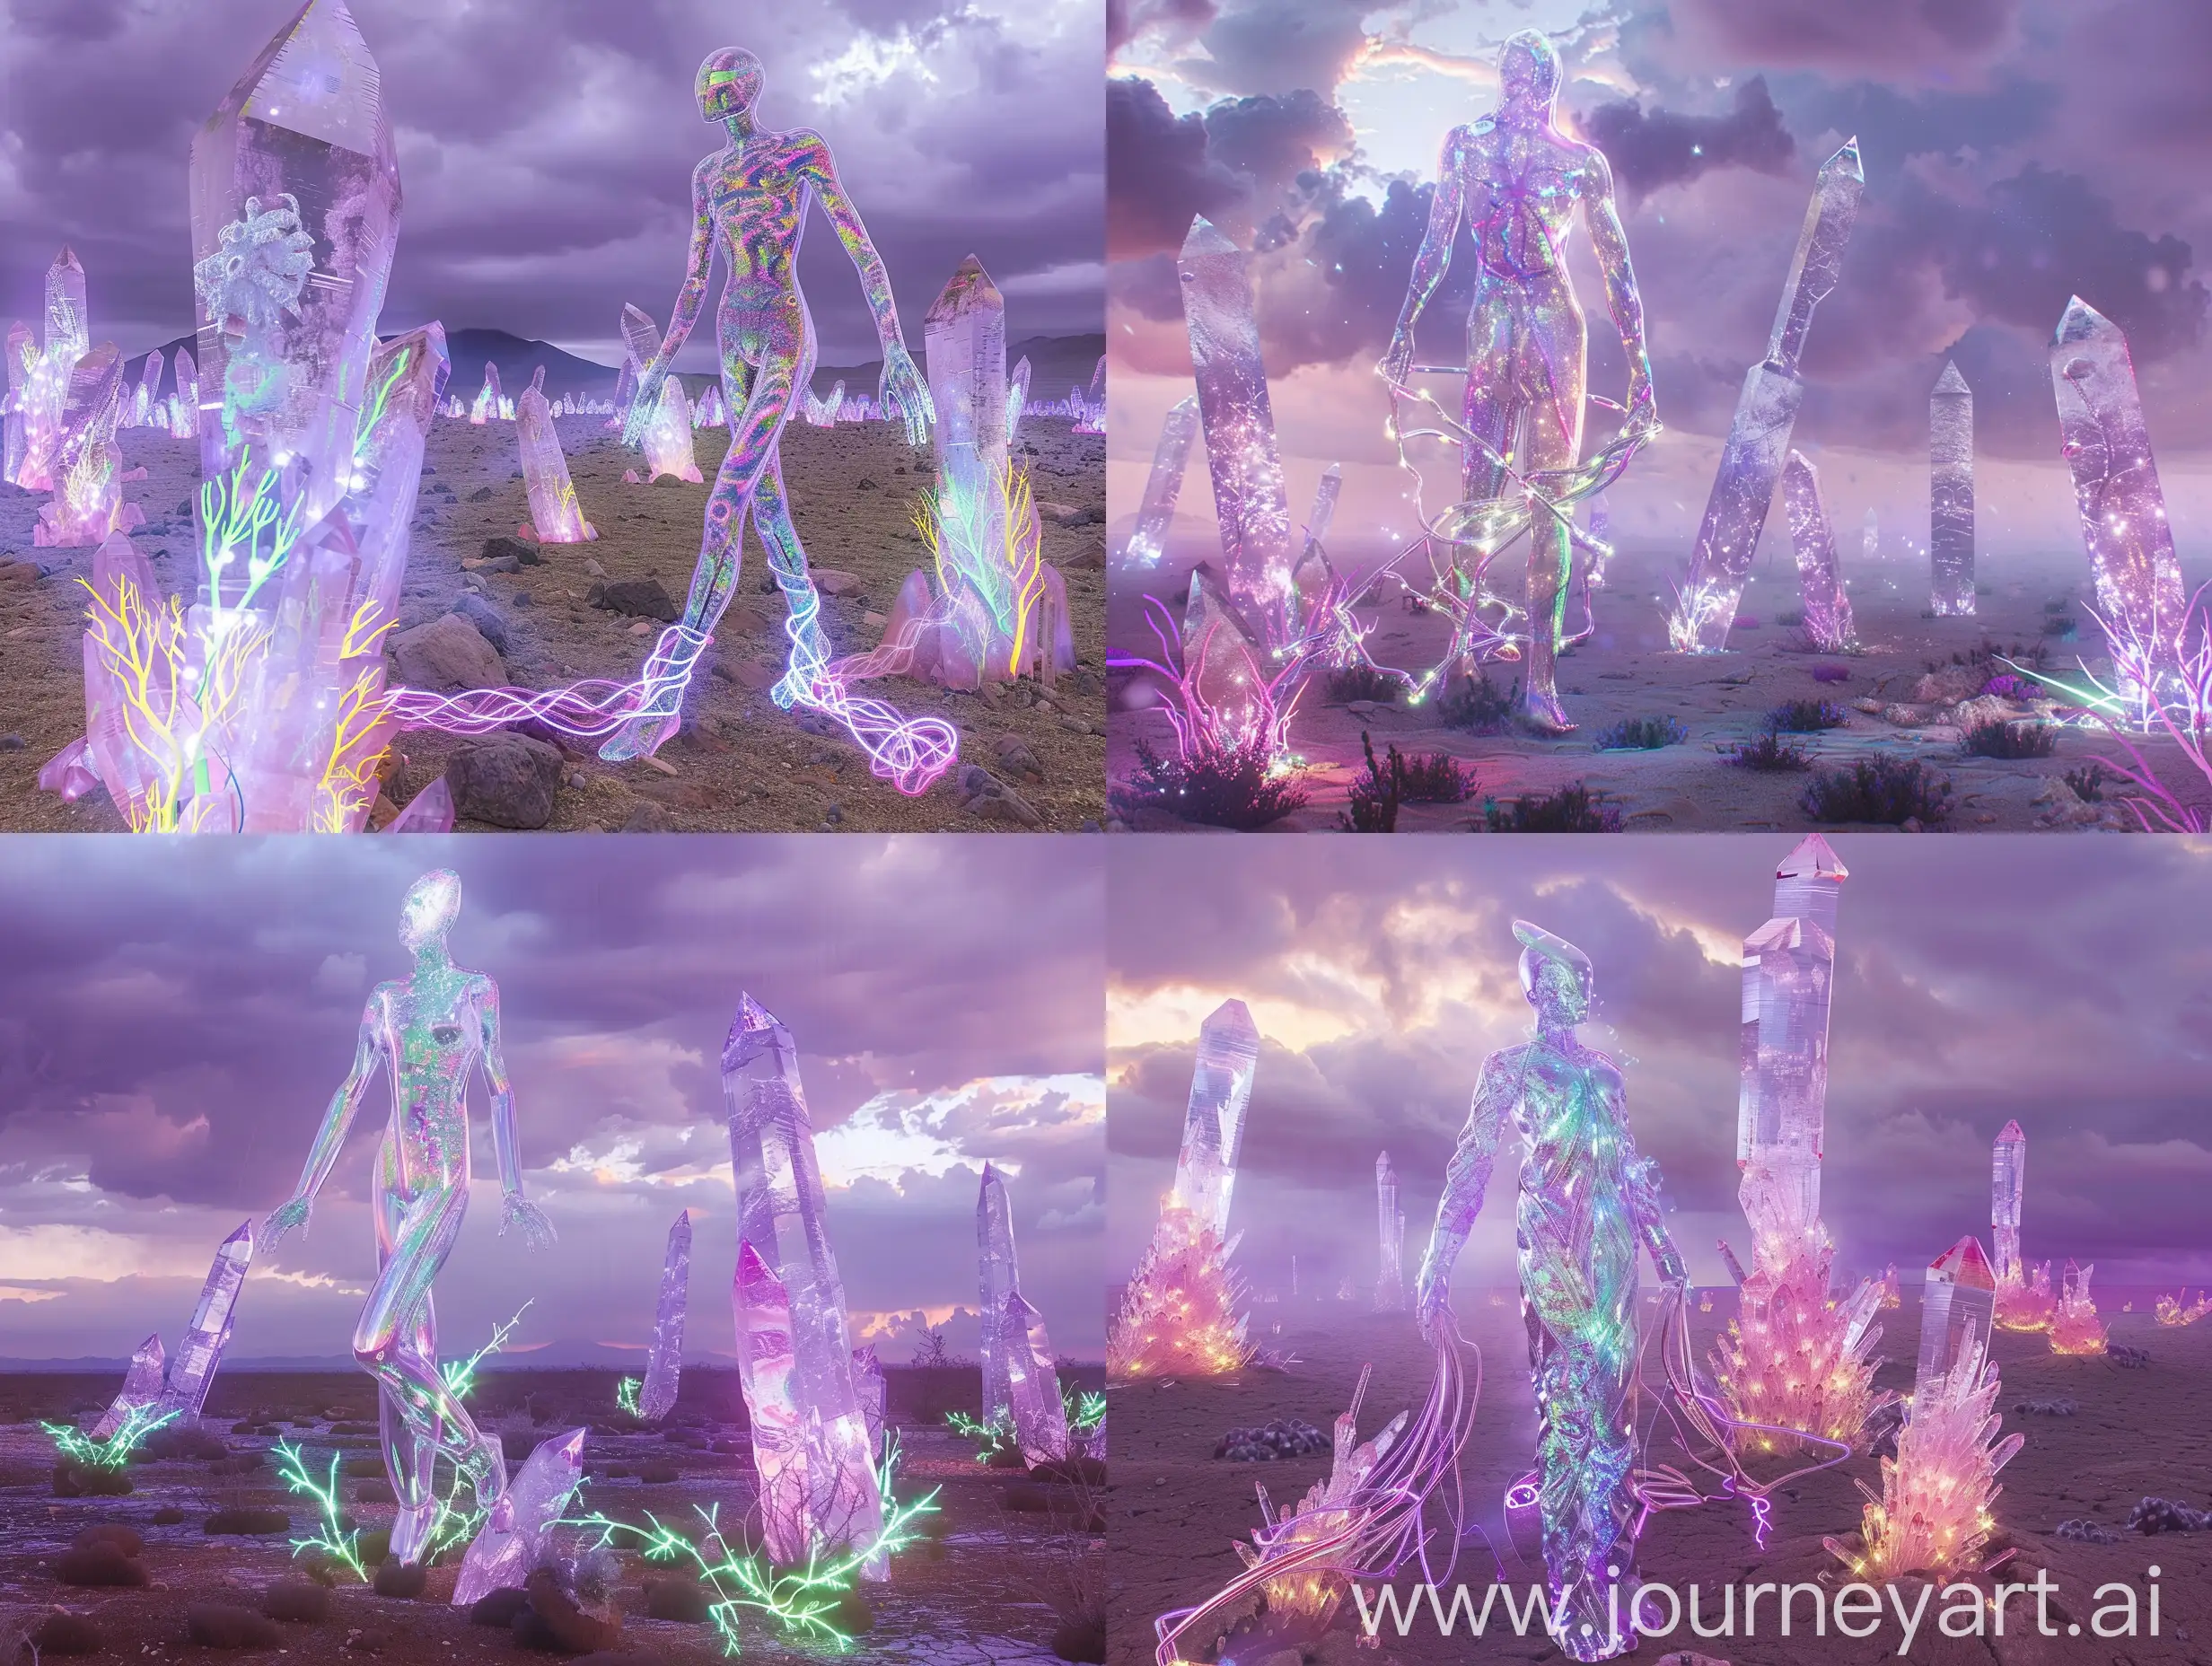 Surreal-Alien-Landscape-with-Transparent-Humanoid-Figure-and-Phosphorescent-Plants